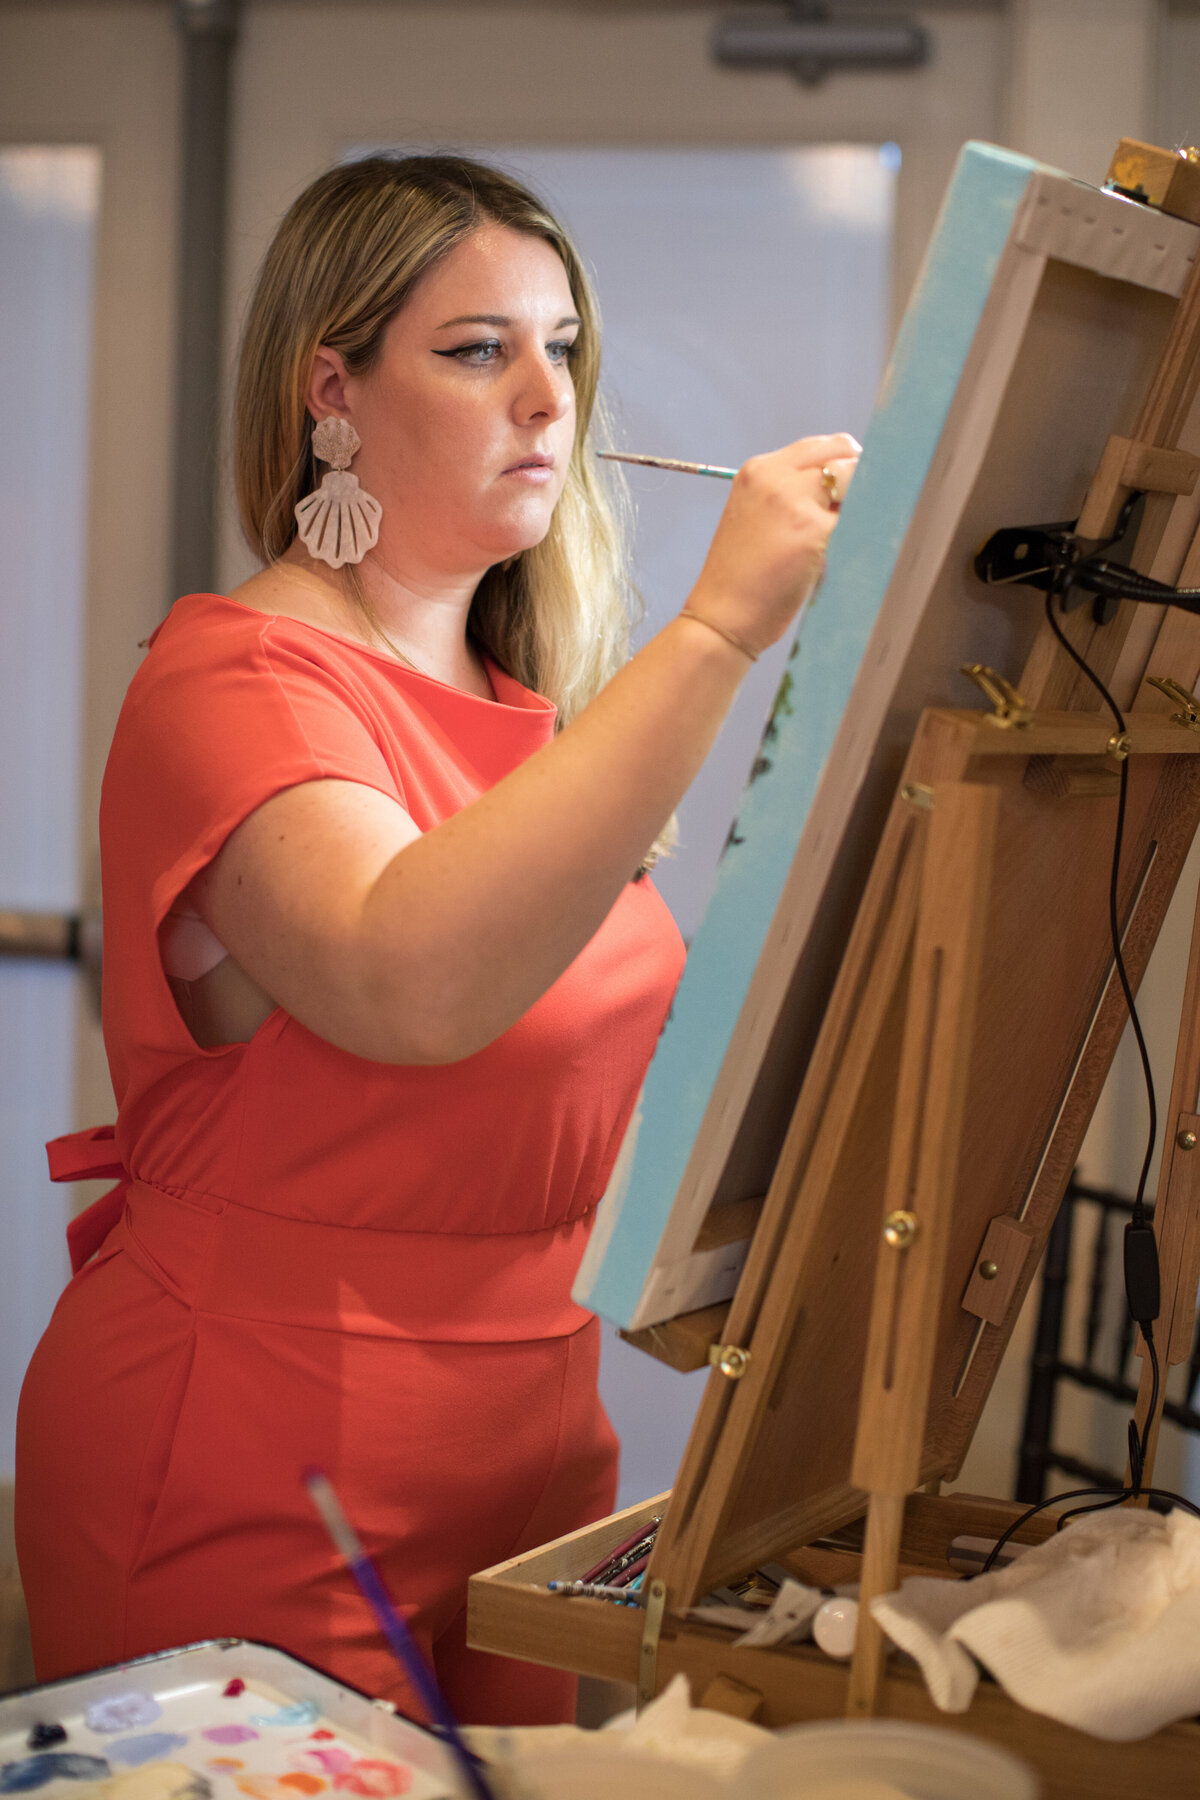 Artist focused on wedding painting at indoor wedding reception